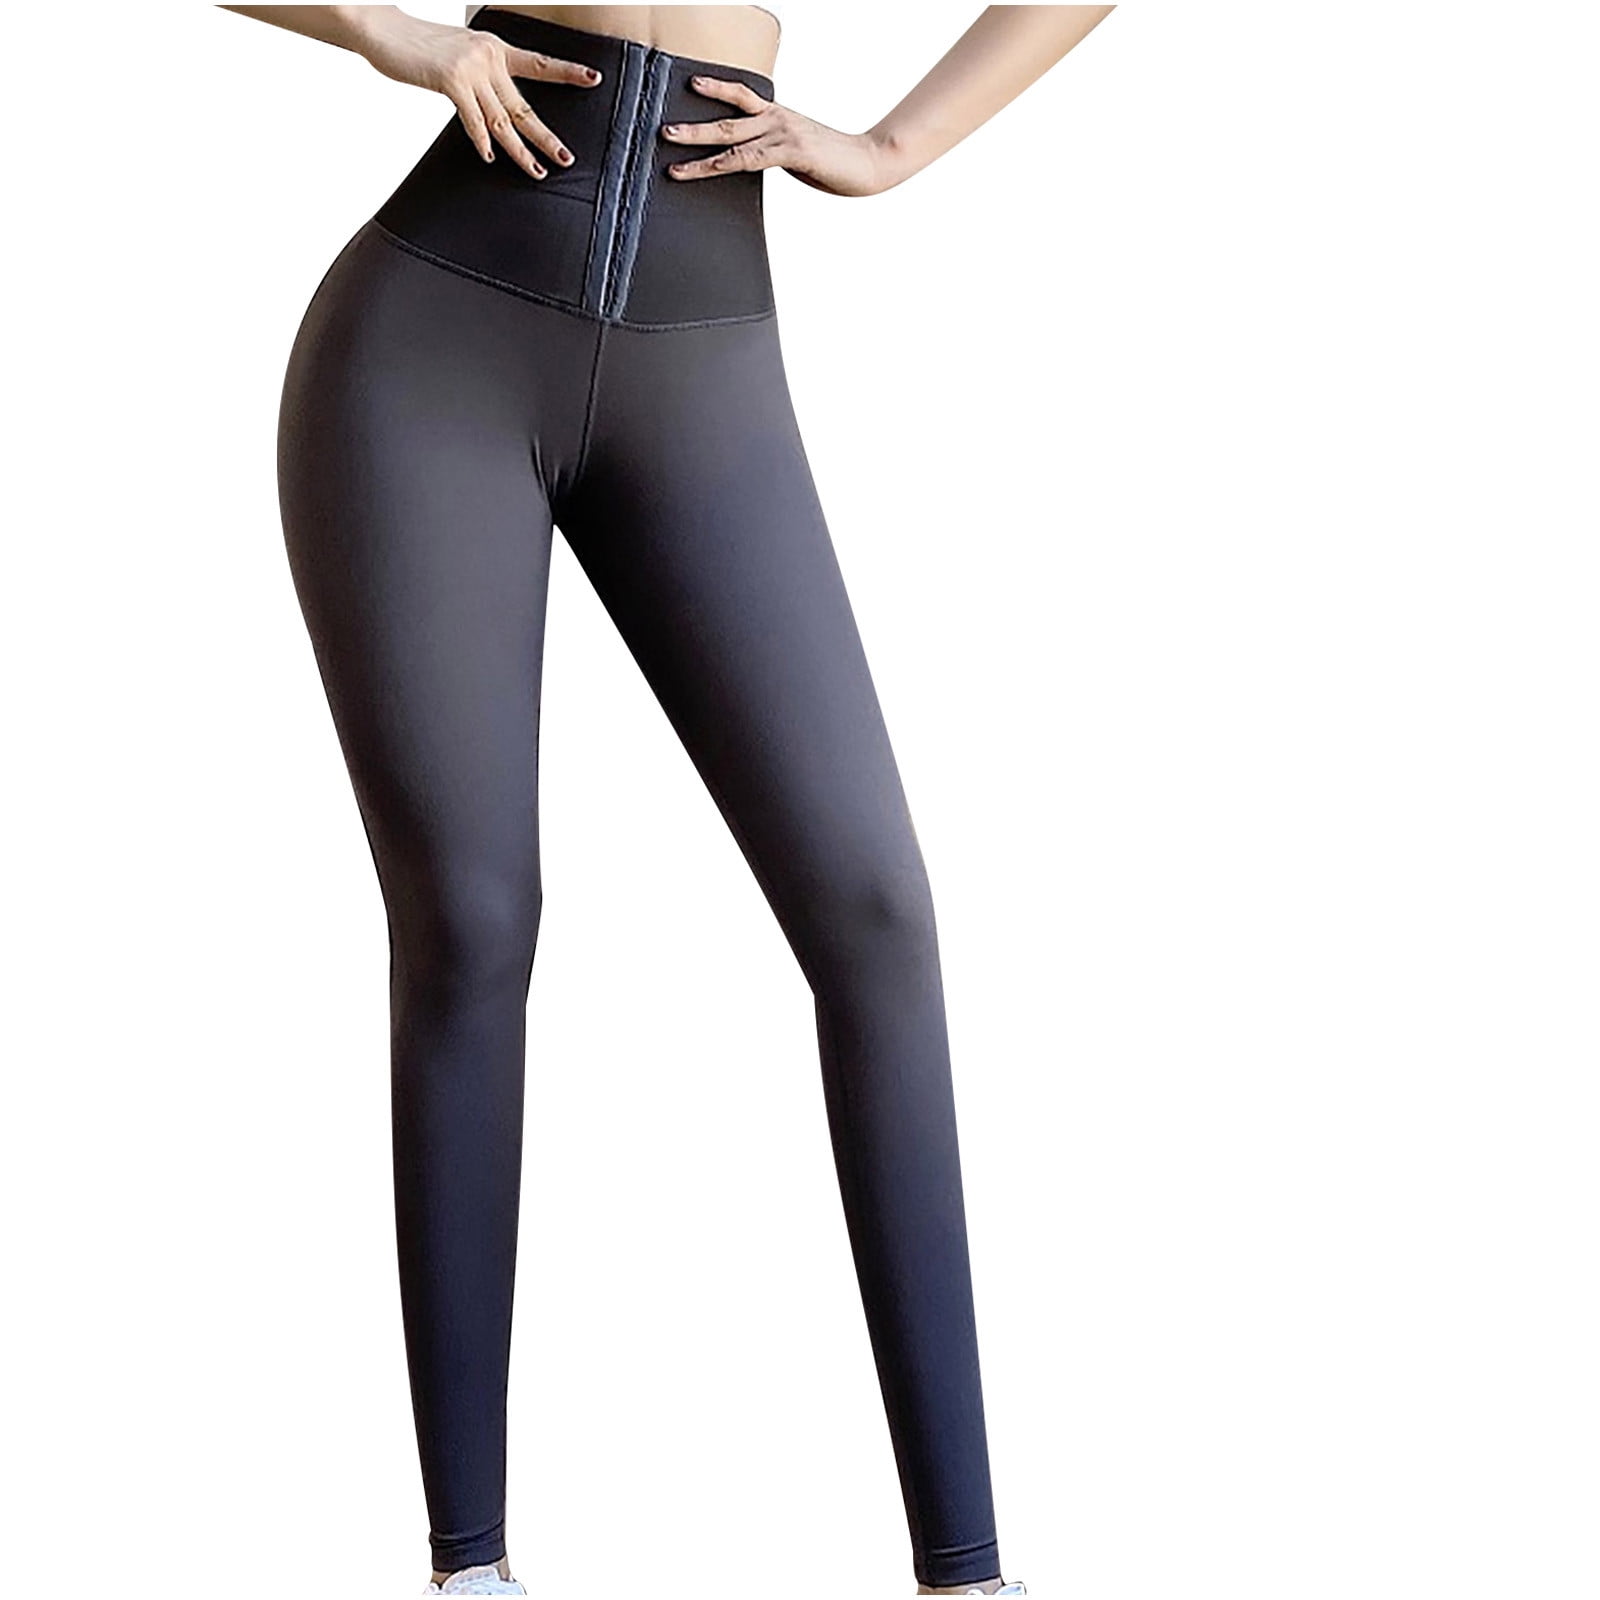 Women's Yoga Pants High Waist Slim Fitness Dance Large Sports Running Pants  S-4XL Tight Trousers - AliExpress